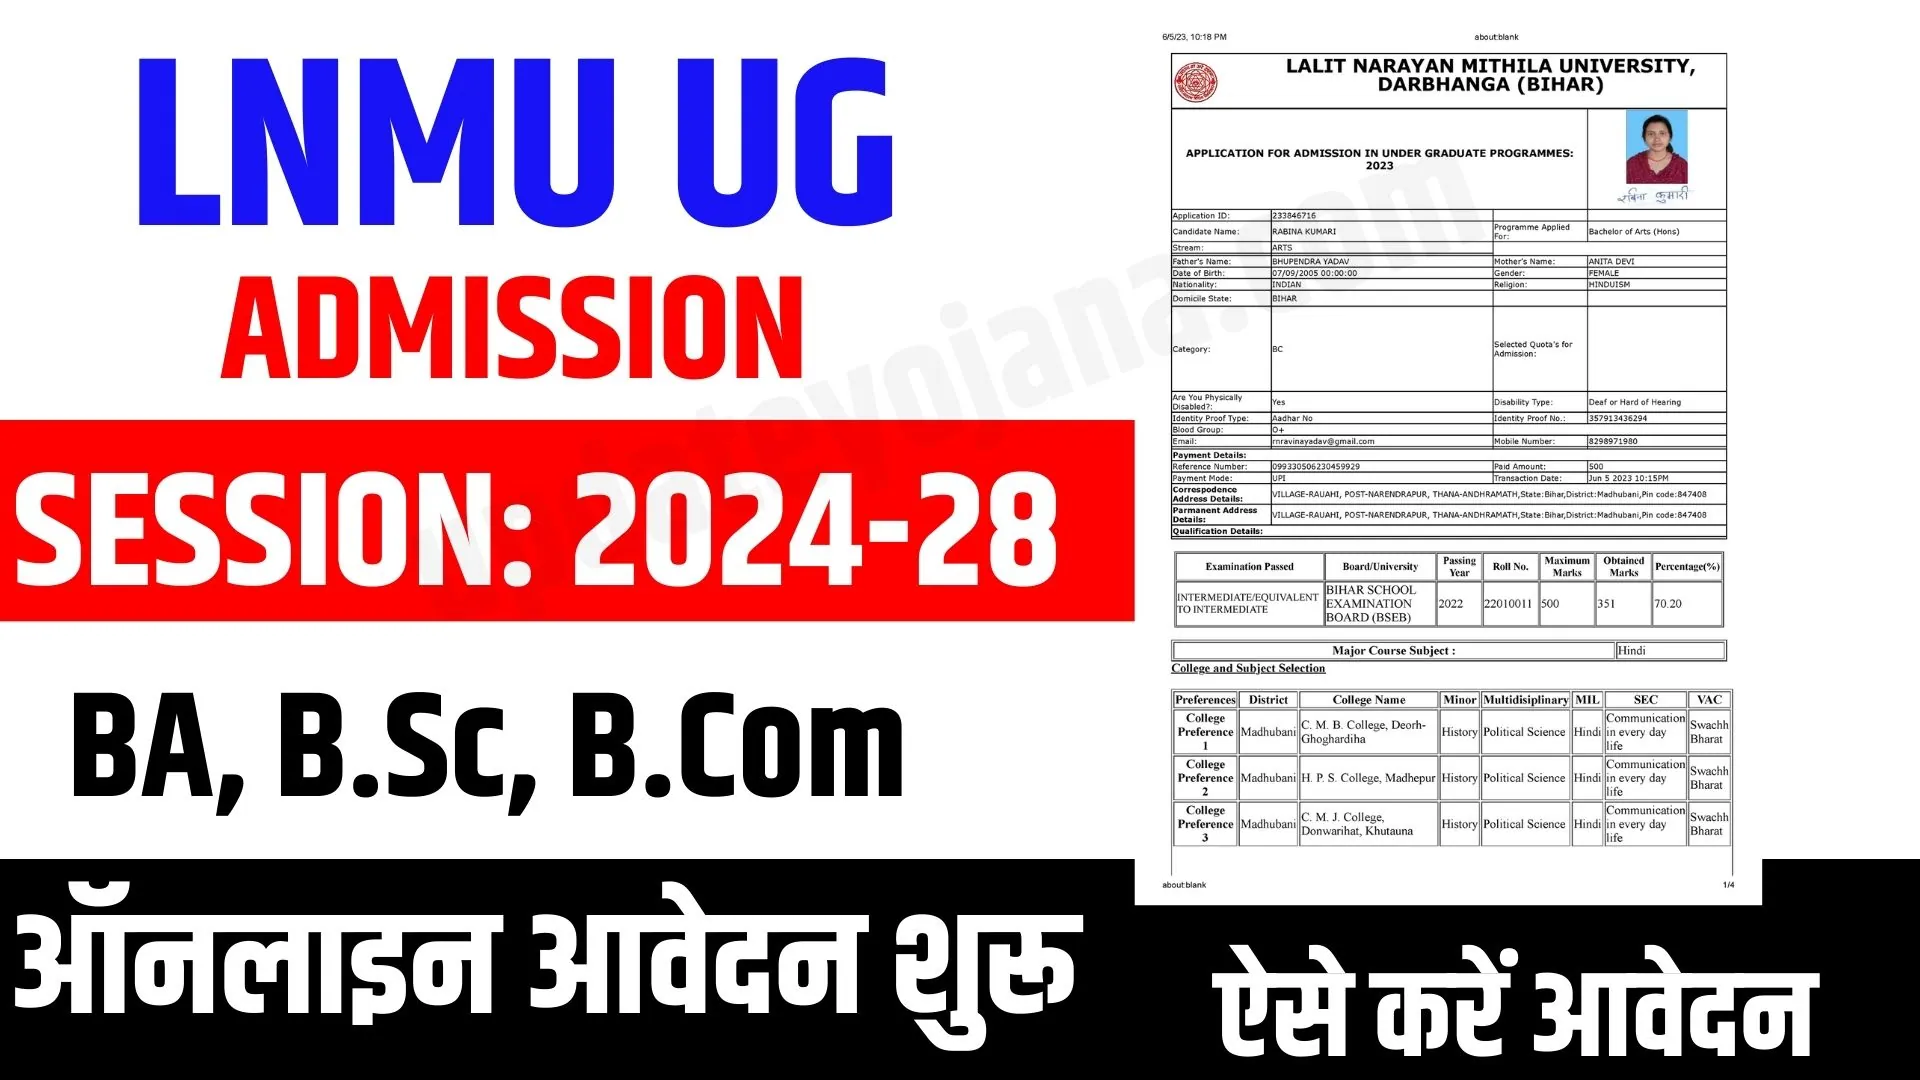 LNMU UG Admission 2024